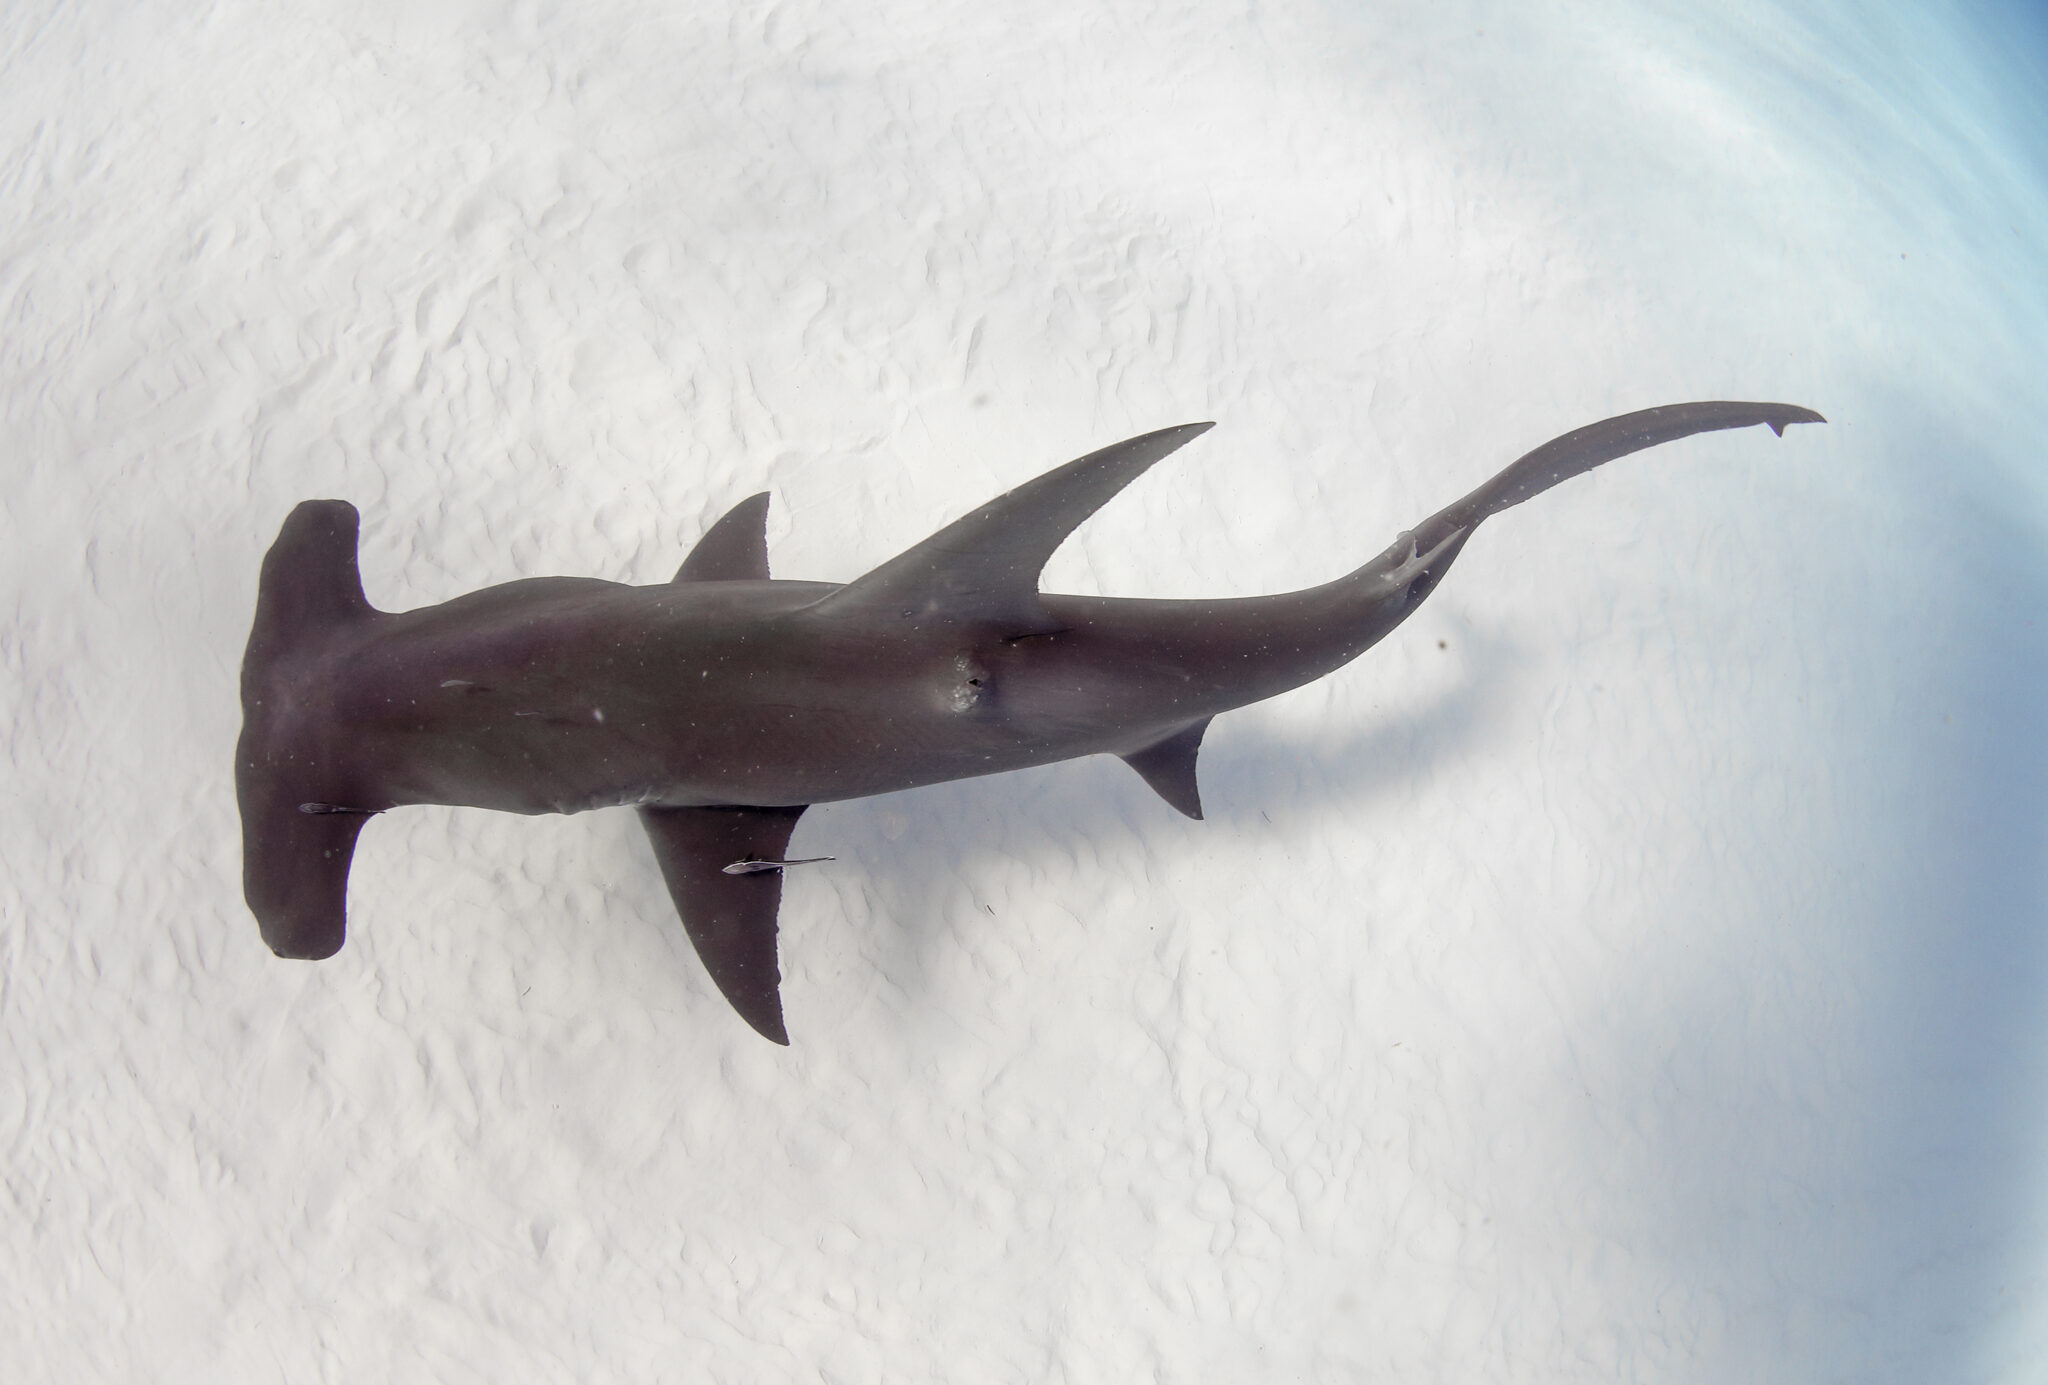 Top down view of hammerhead shark